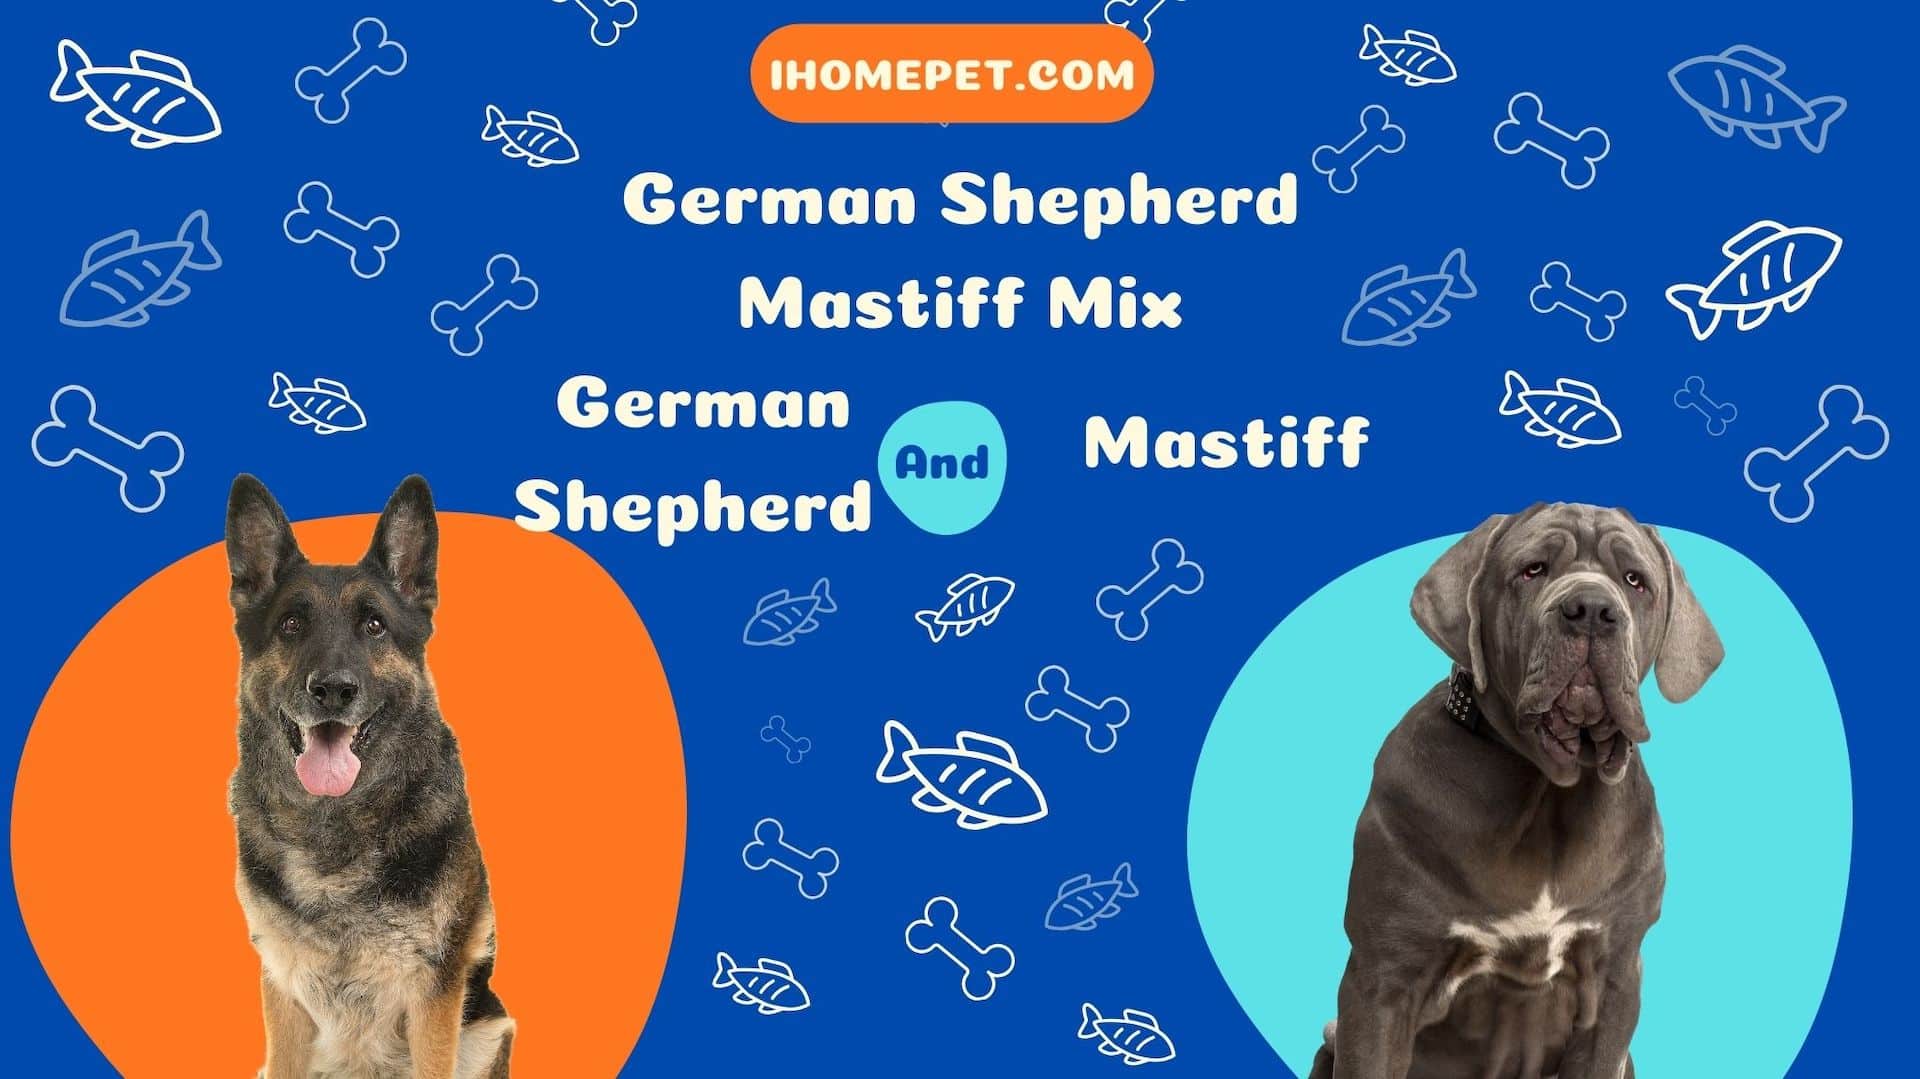 German Shepherd Mastiff mix two breeds with robust muzzle